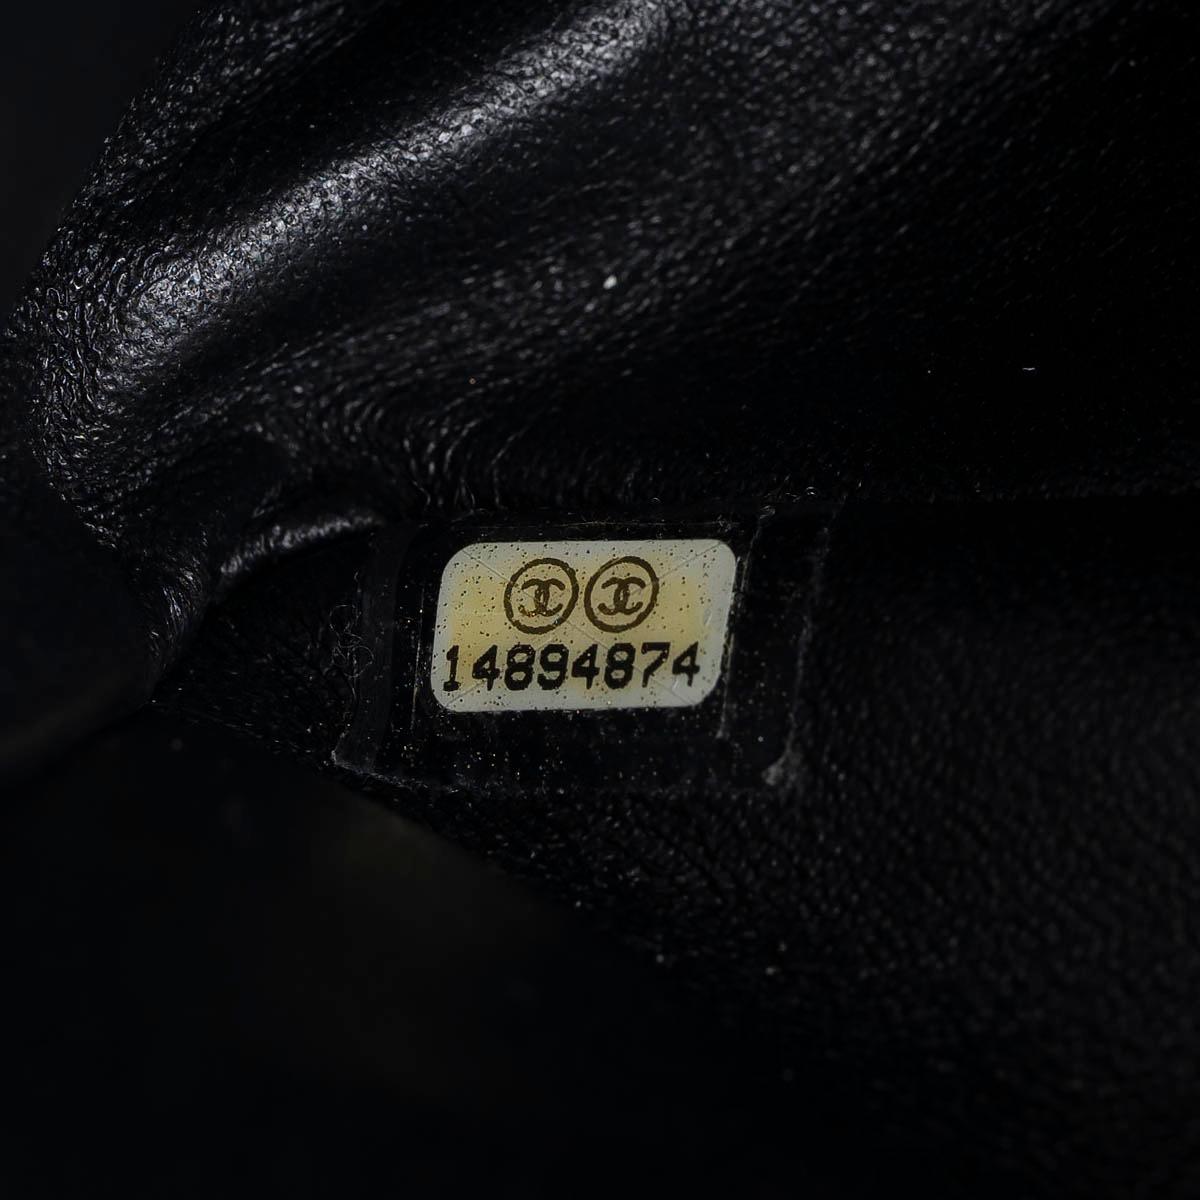 CHANEL dark brown patent leather 2.55 REISSUE 226 LARGE Shoulder Bag For Sale 6